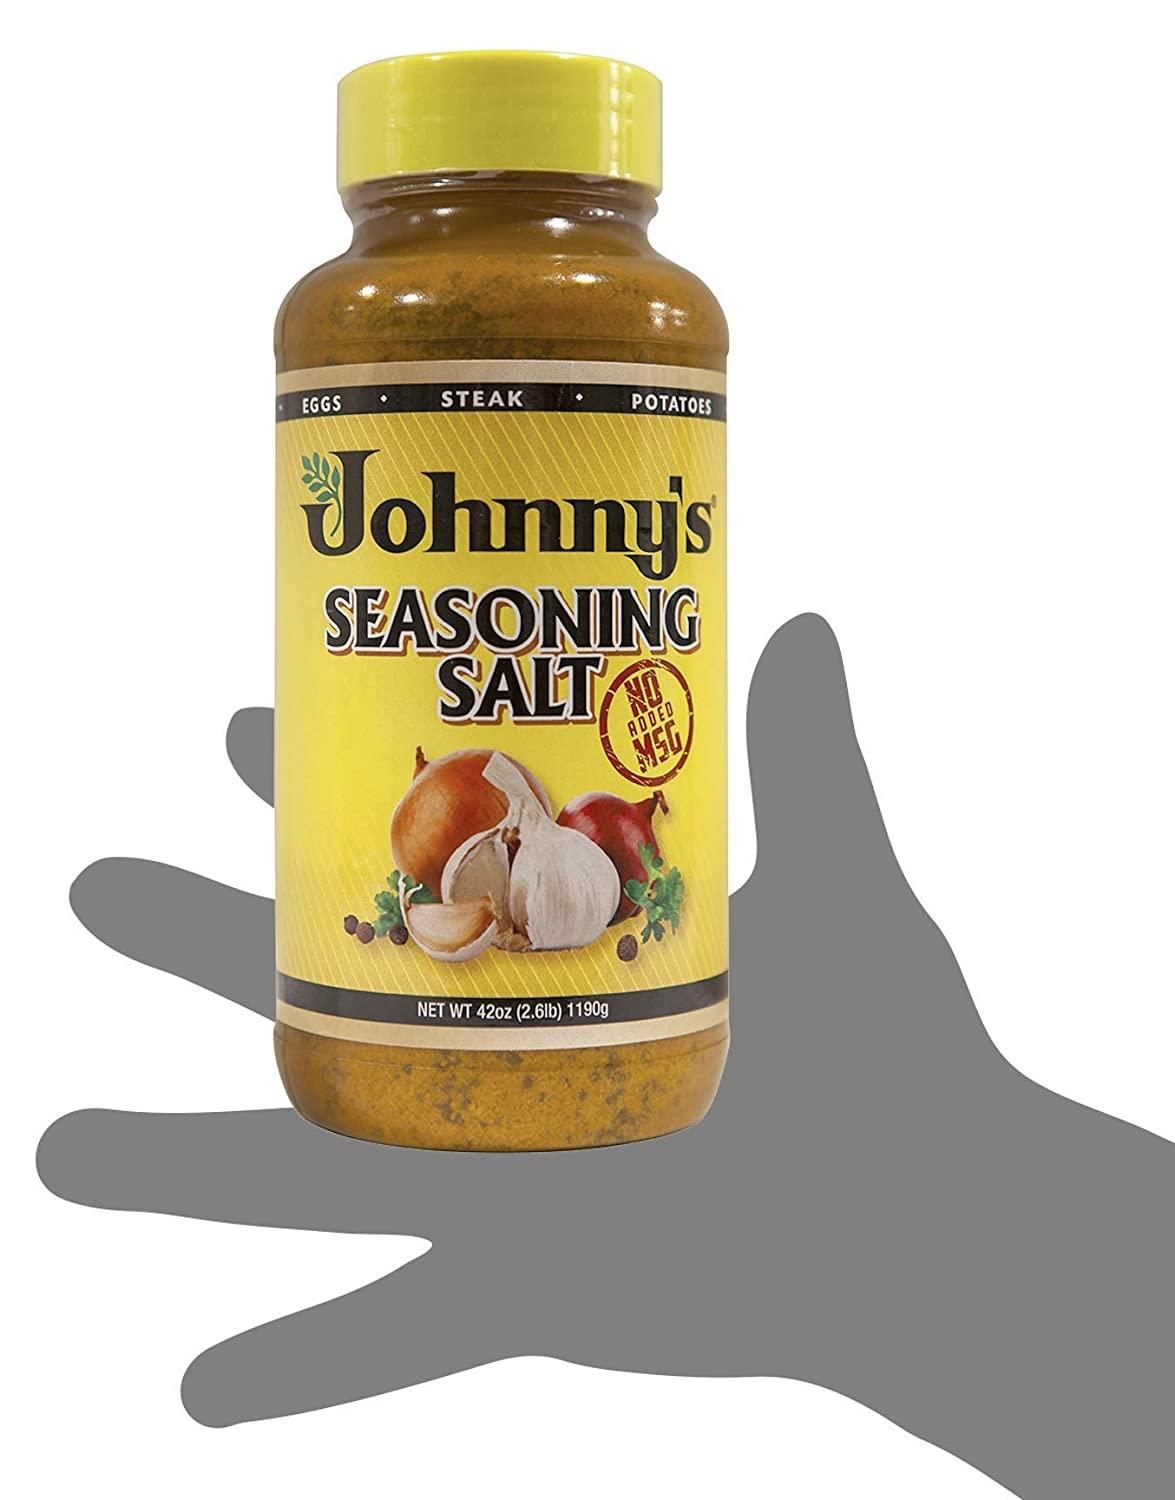 Seasoning Salt (Original Formula - With MSG)